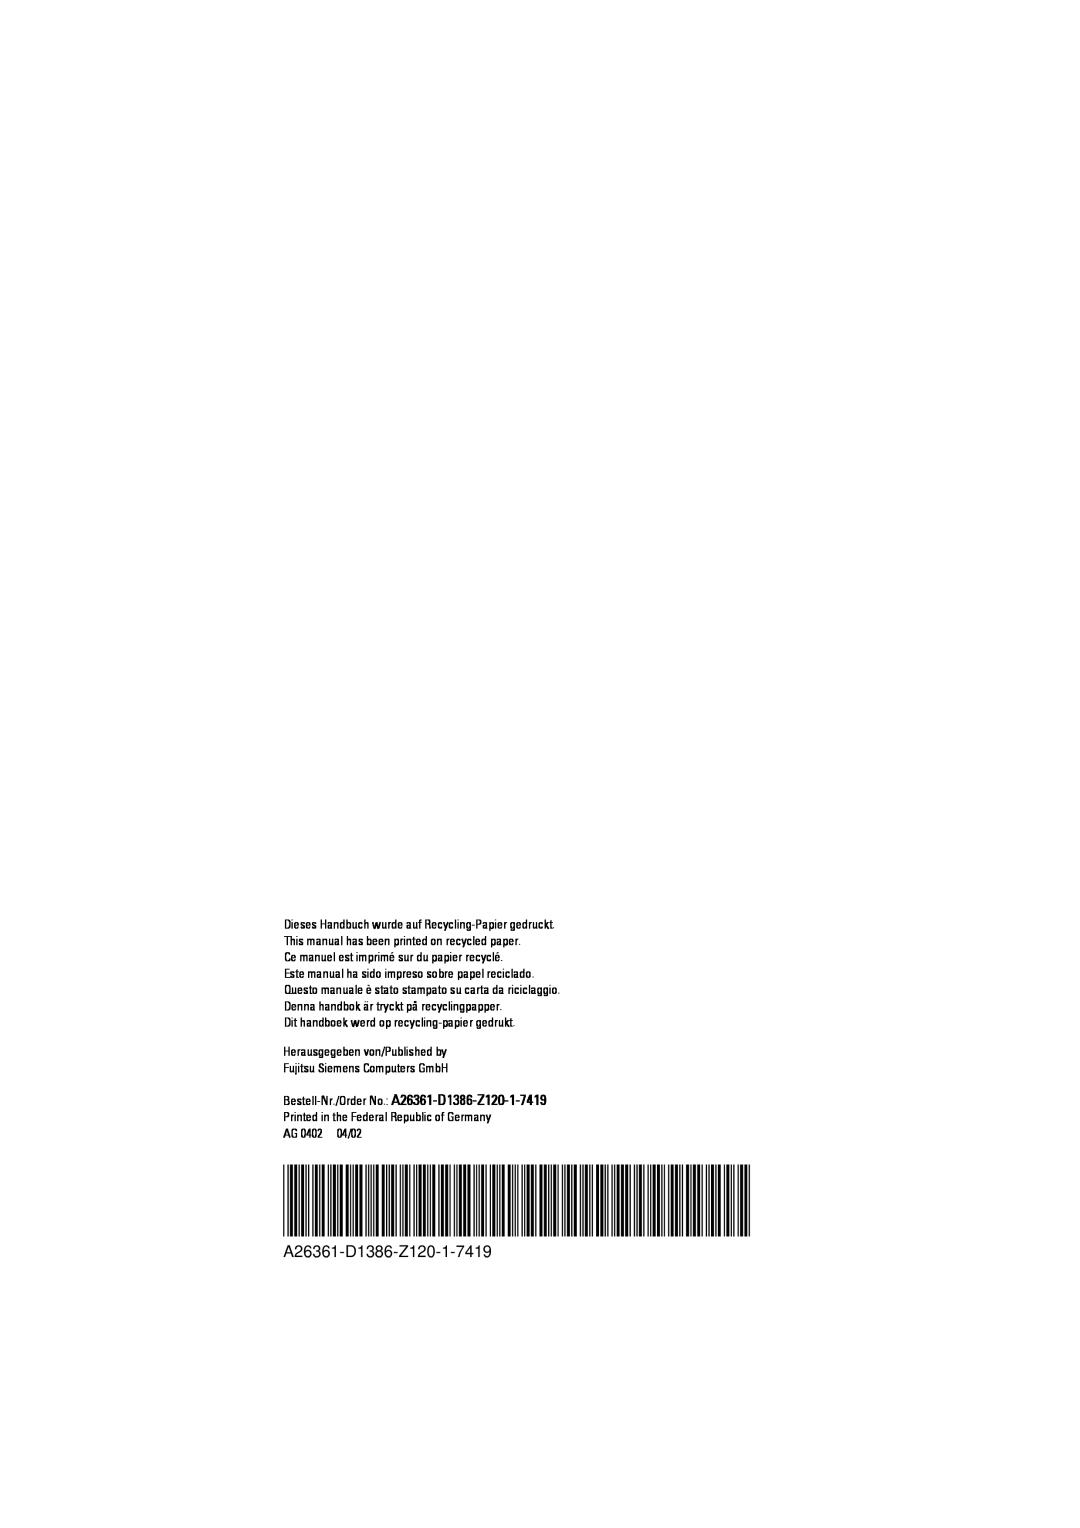 Fujitsu technical manual Bestell-Nr./Order No. A26361-D1386-Z120-1-7419 